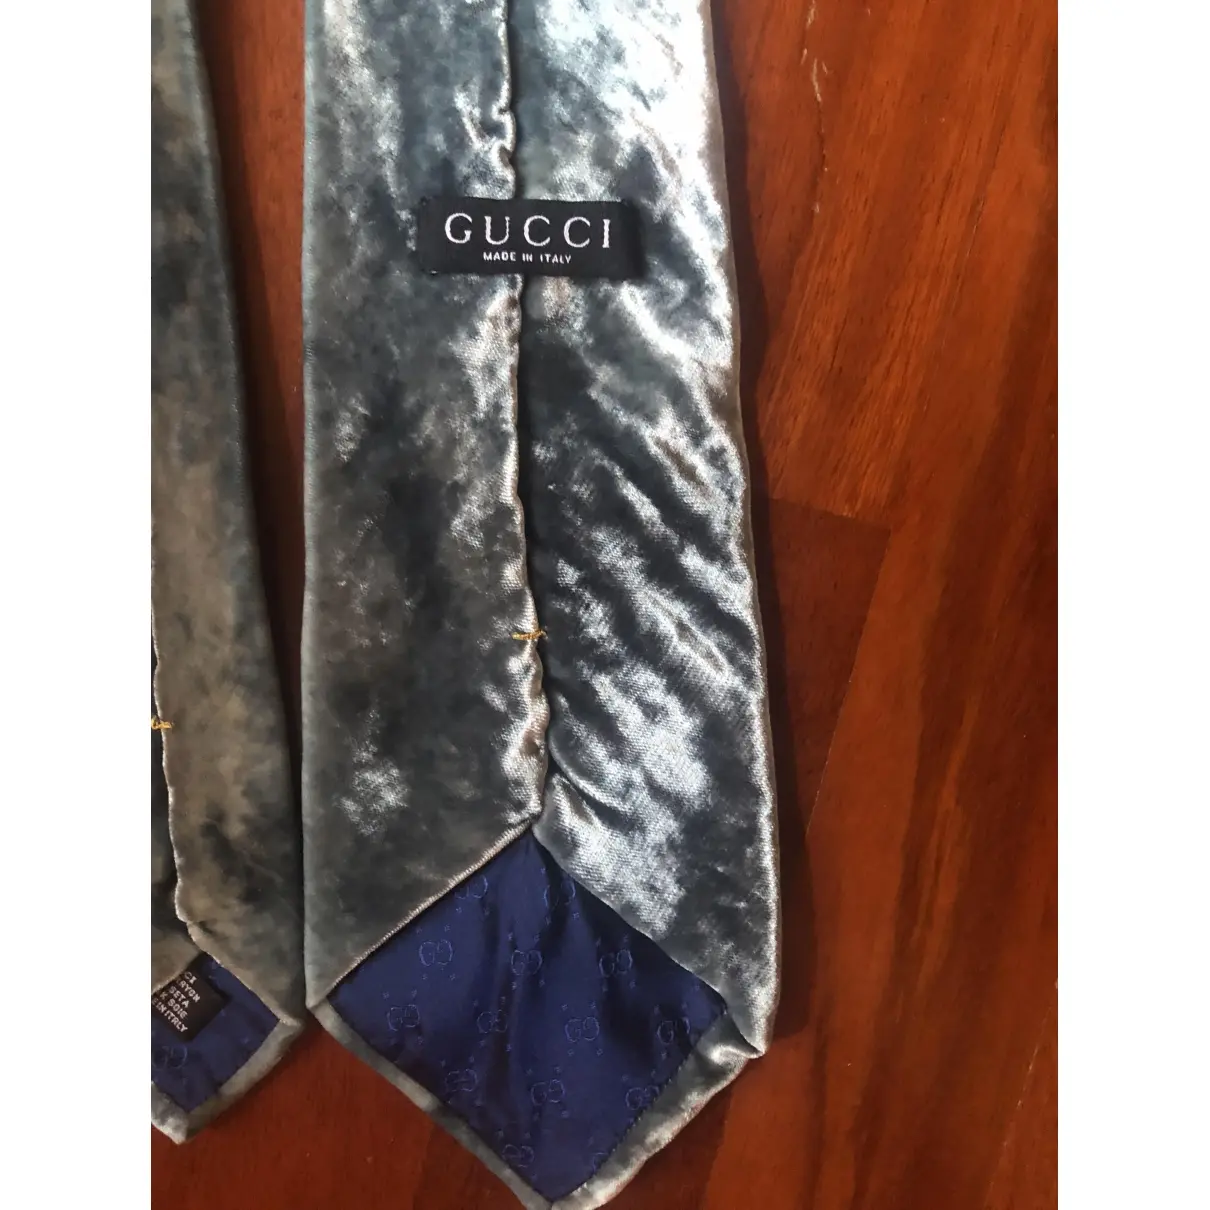 Buy Gucci Tie online